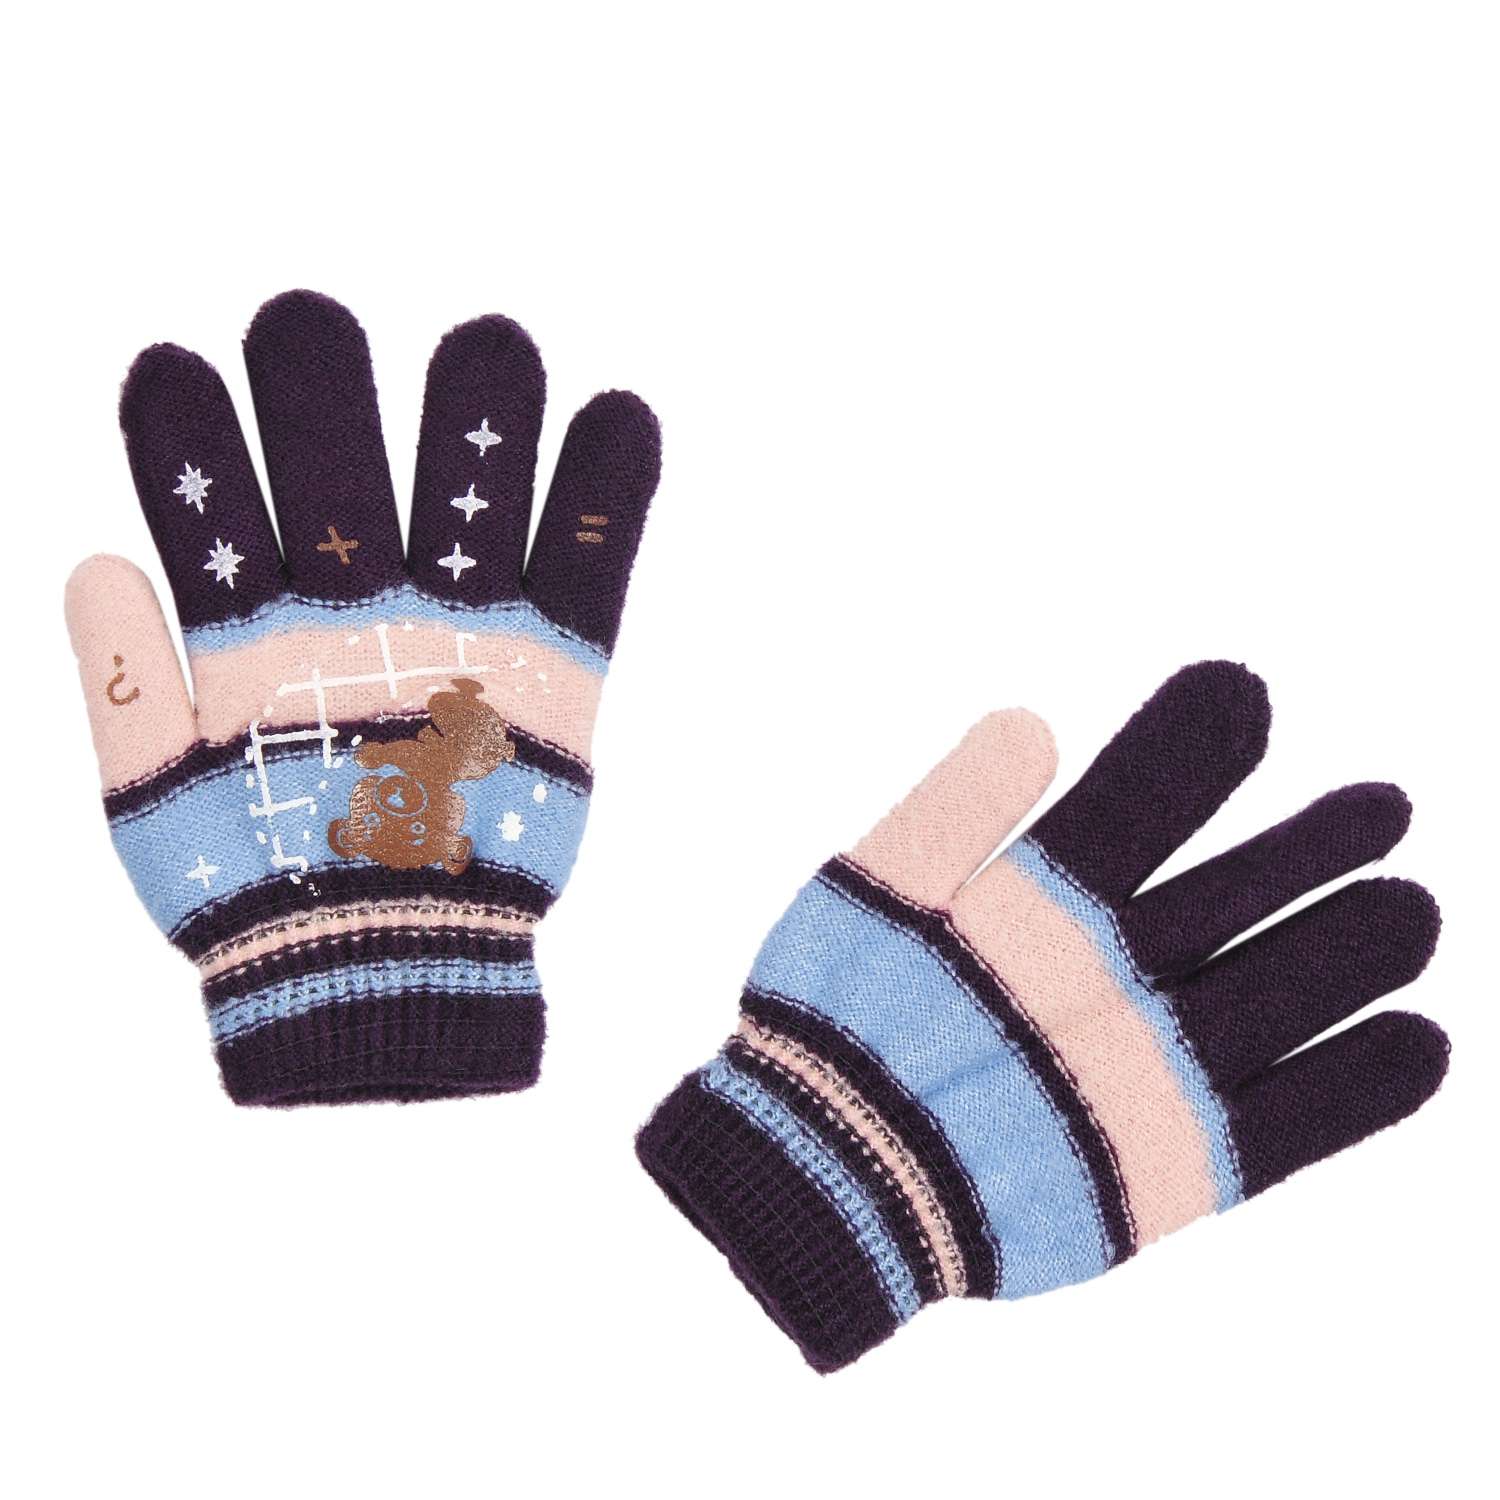 Перчатки S.gloves S 2160-M фиолетовый - фото 1